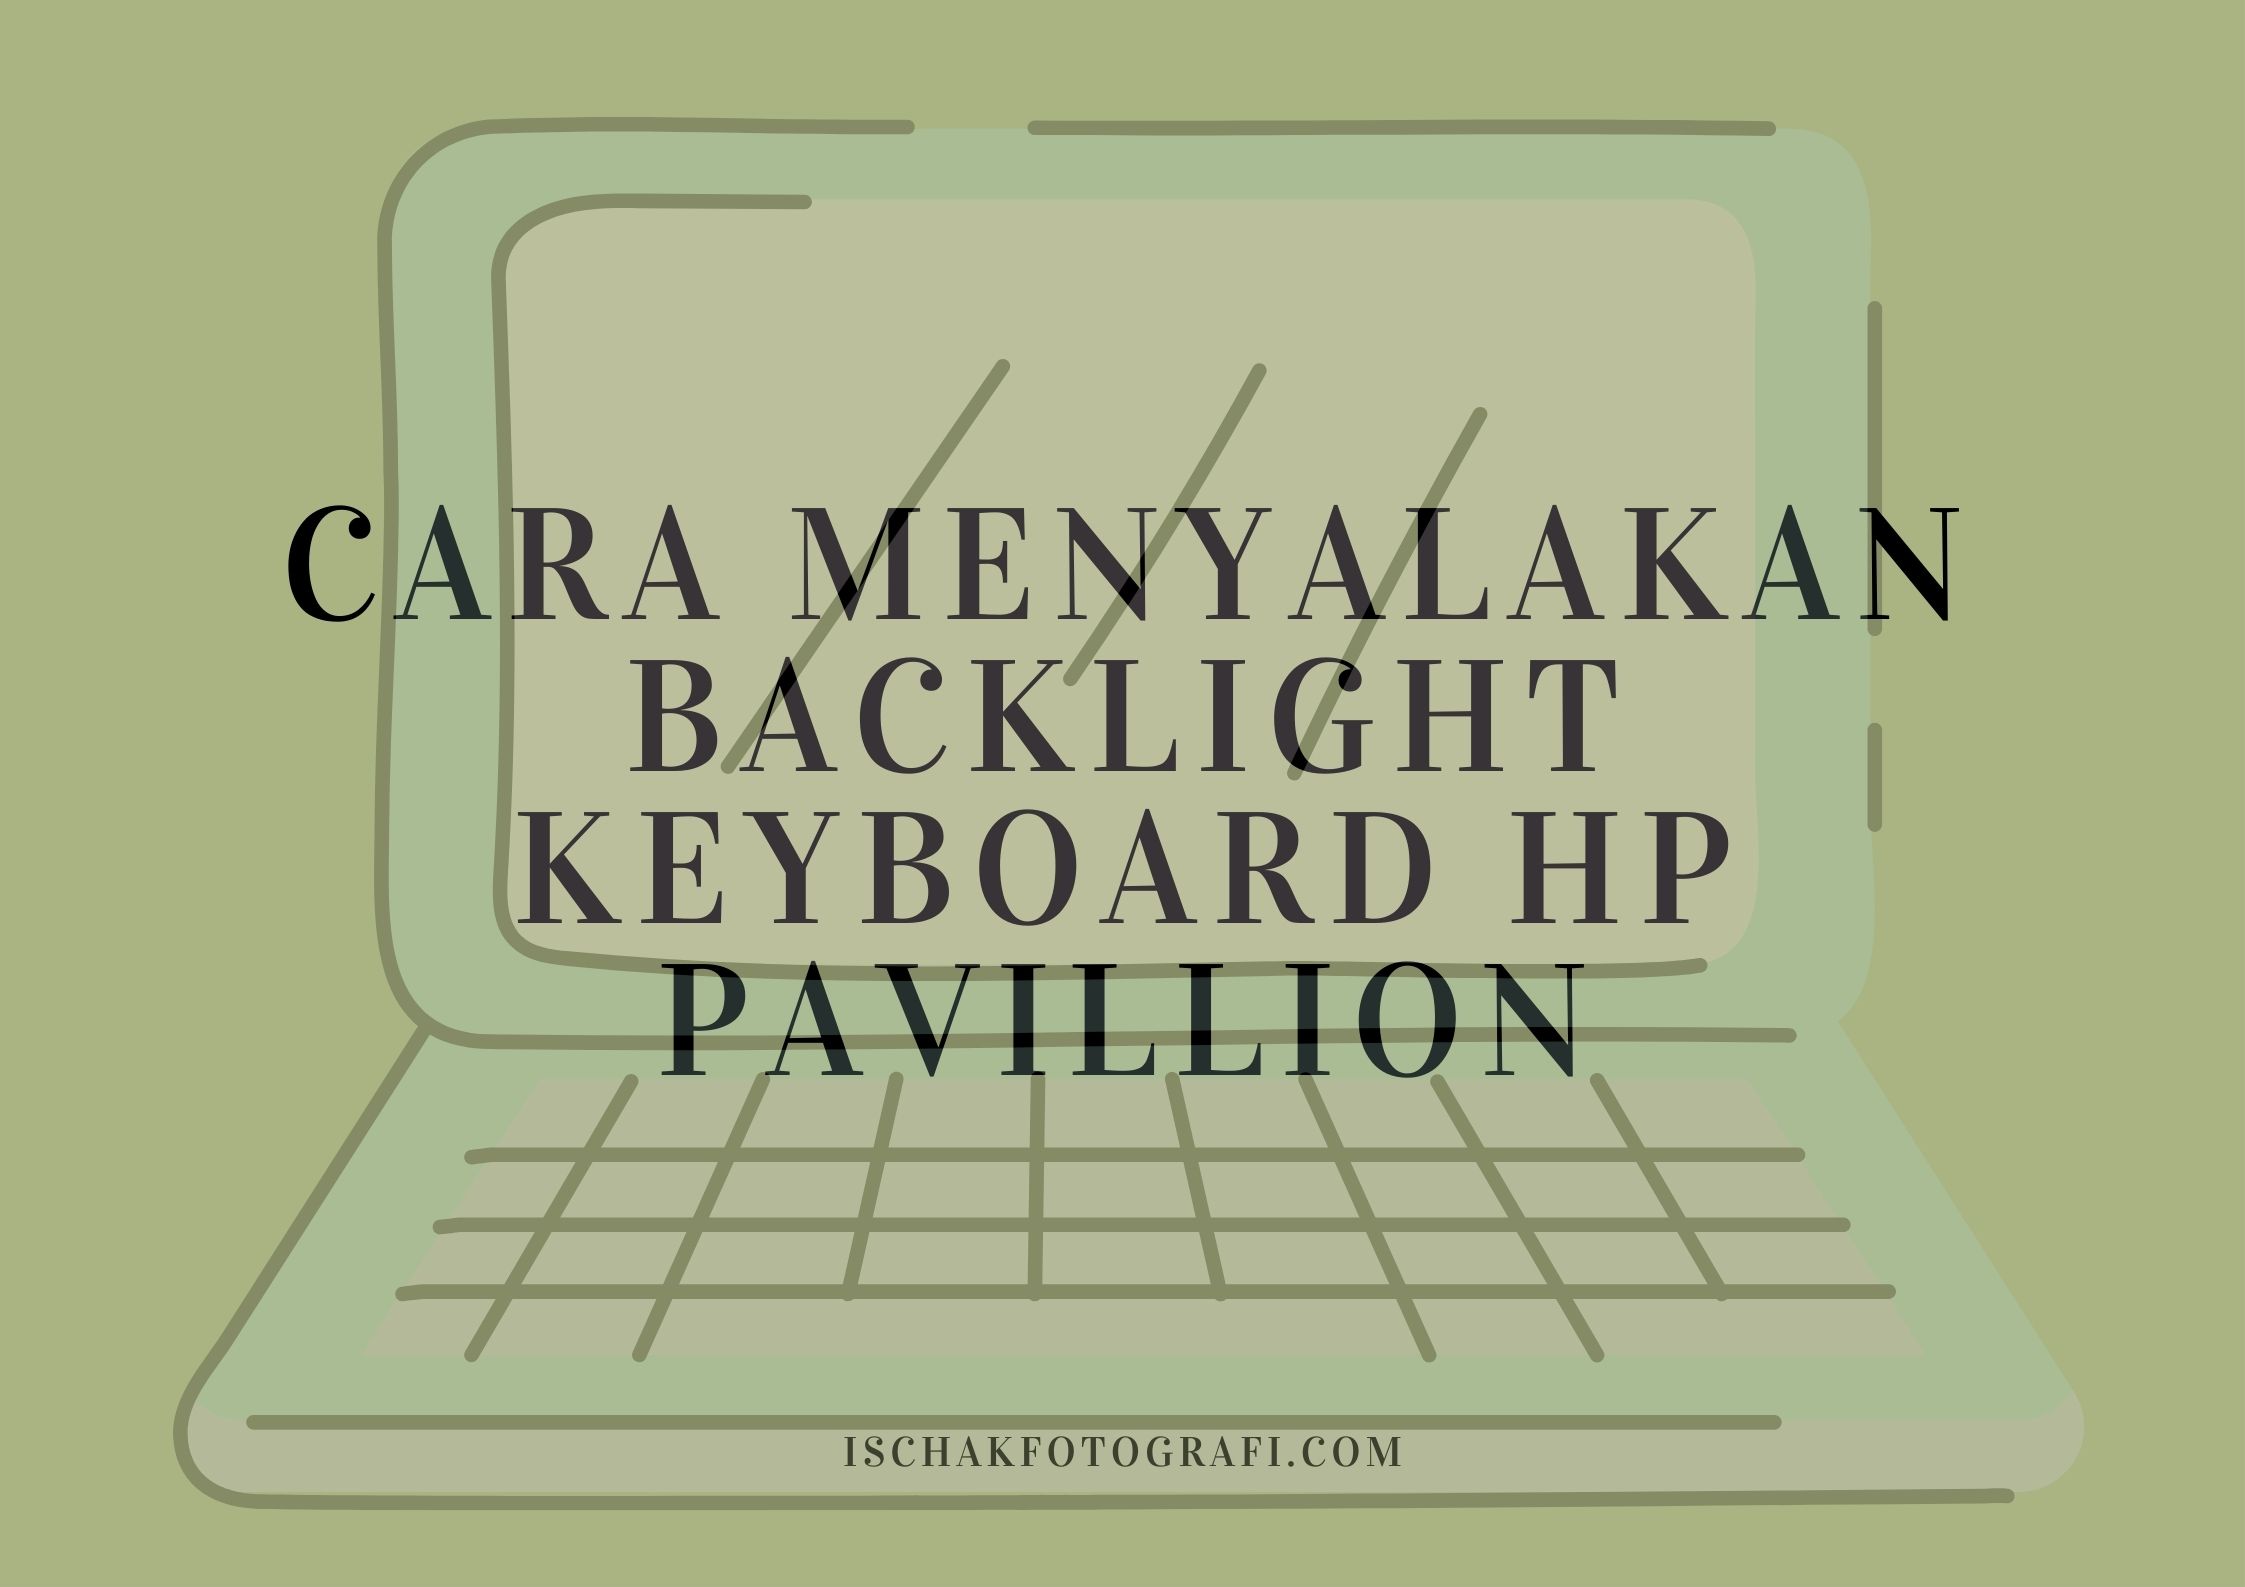 Cara Menyalakan Backlight Keyboard HP Pavillion